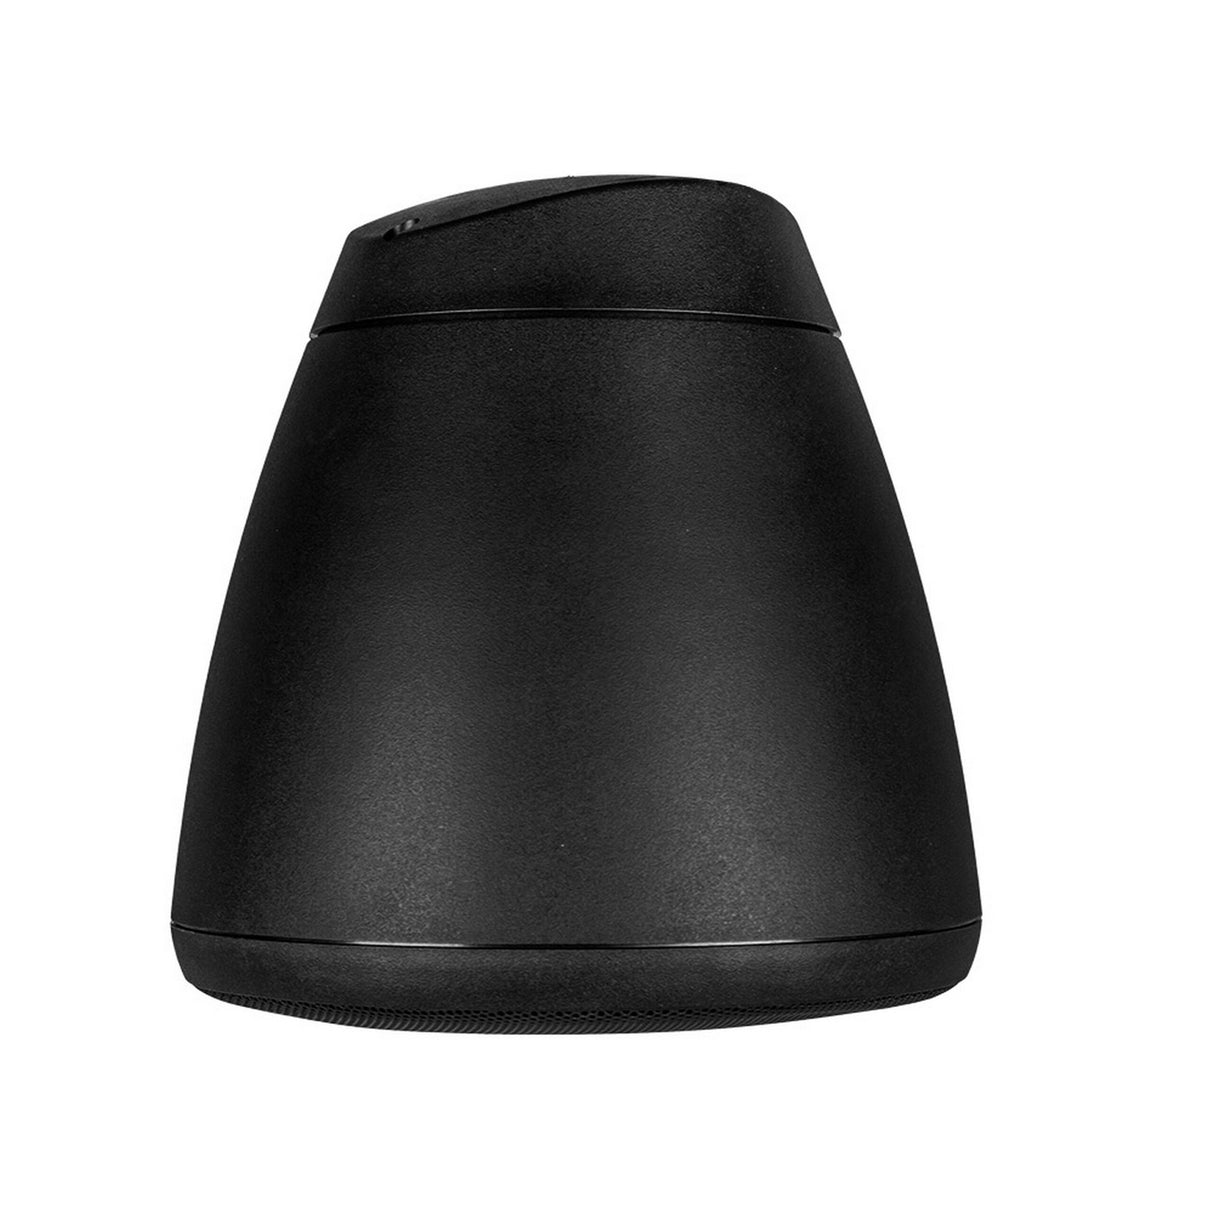 SoundTube RS42-EZ-BK 4-Inch Hanging Speaker, Black